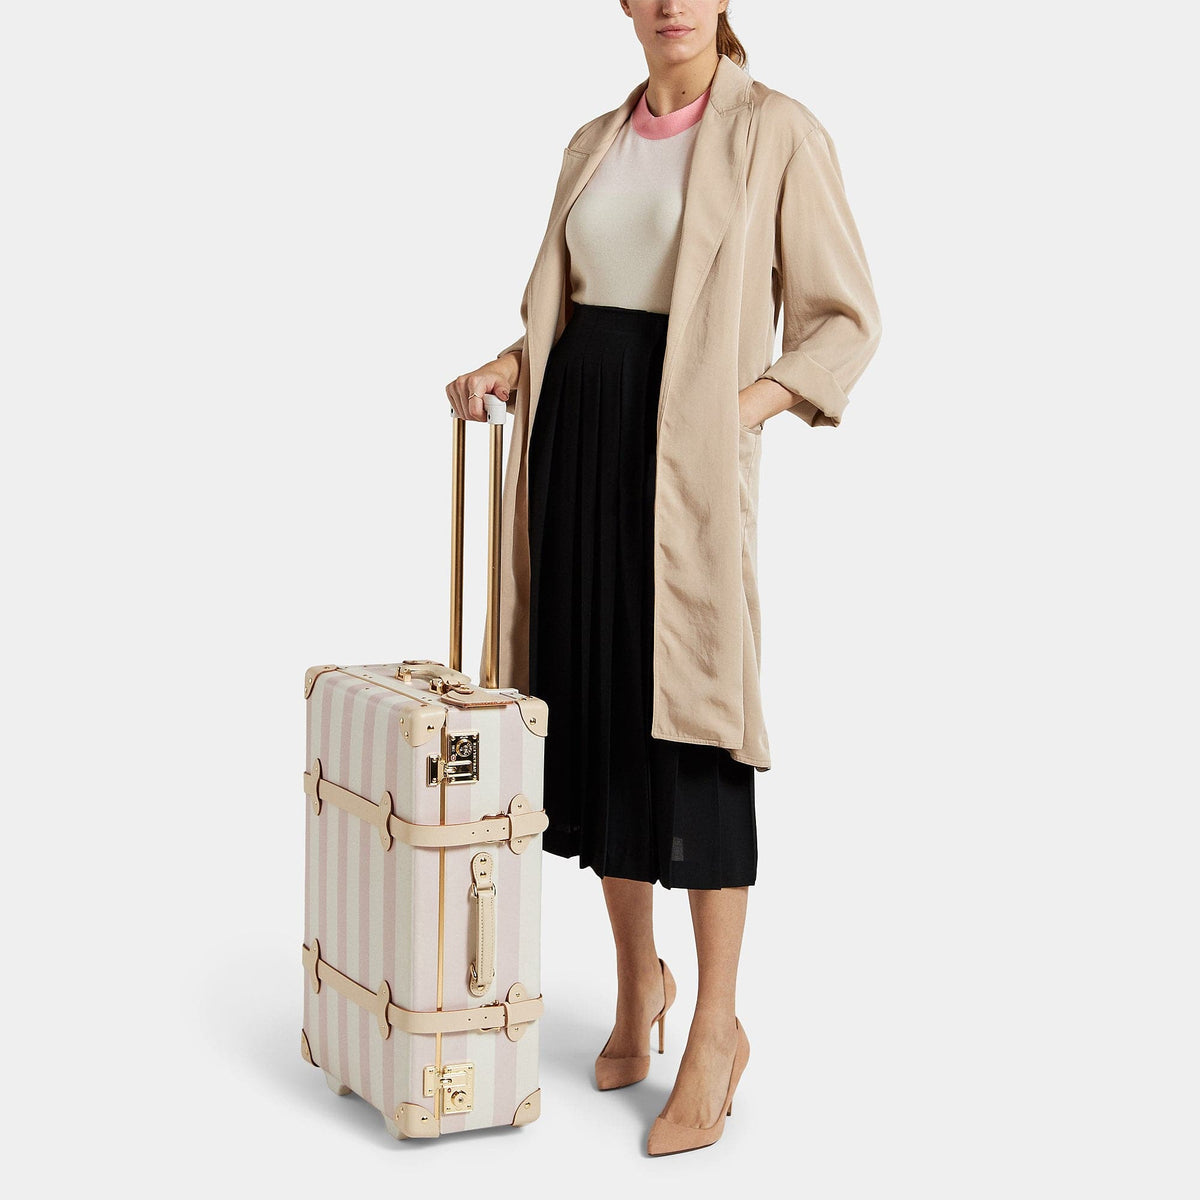 SteamLine Luggage Luggage & Travel Bags